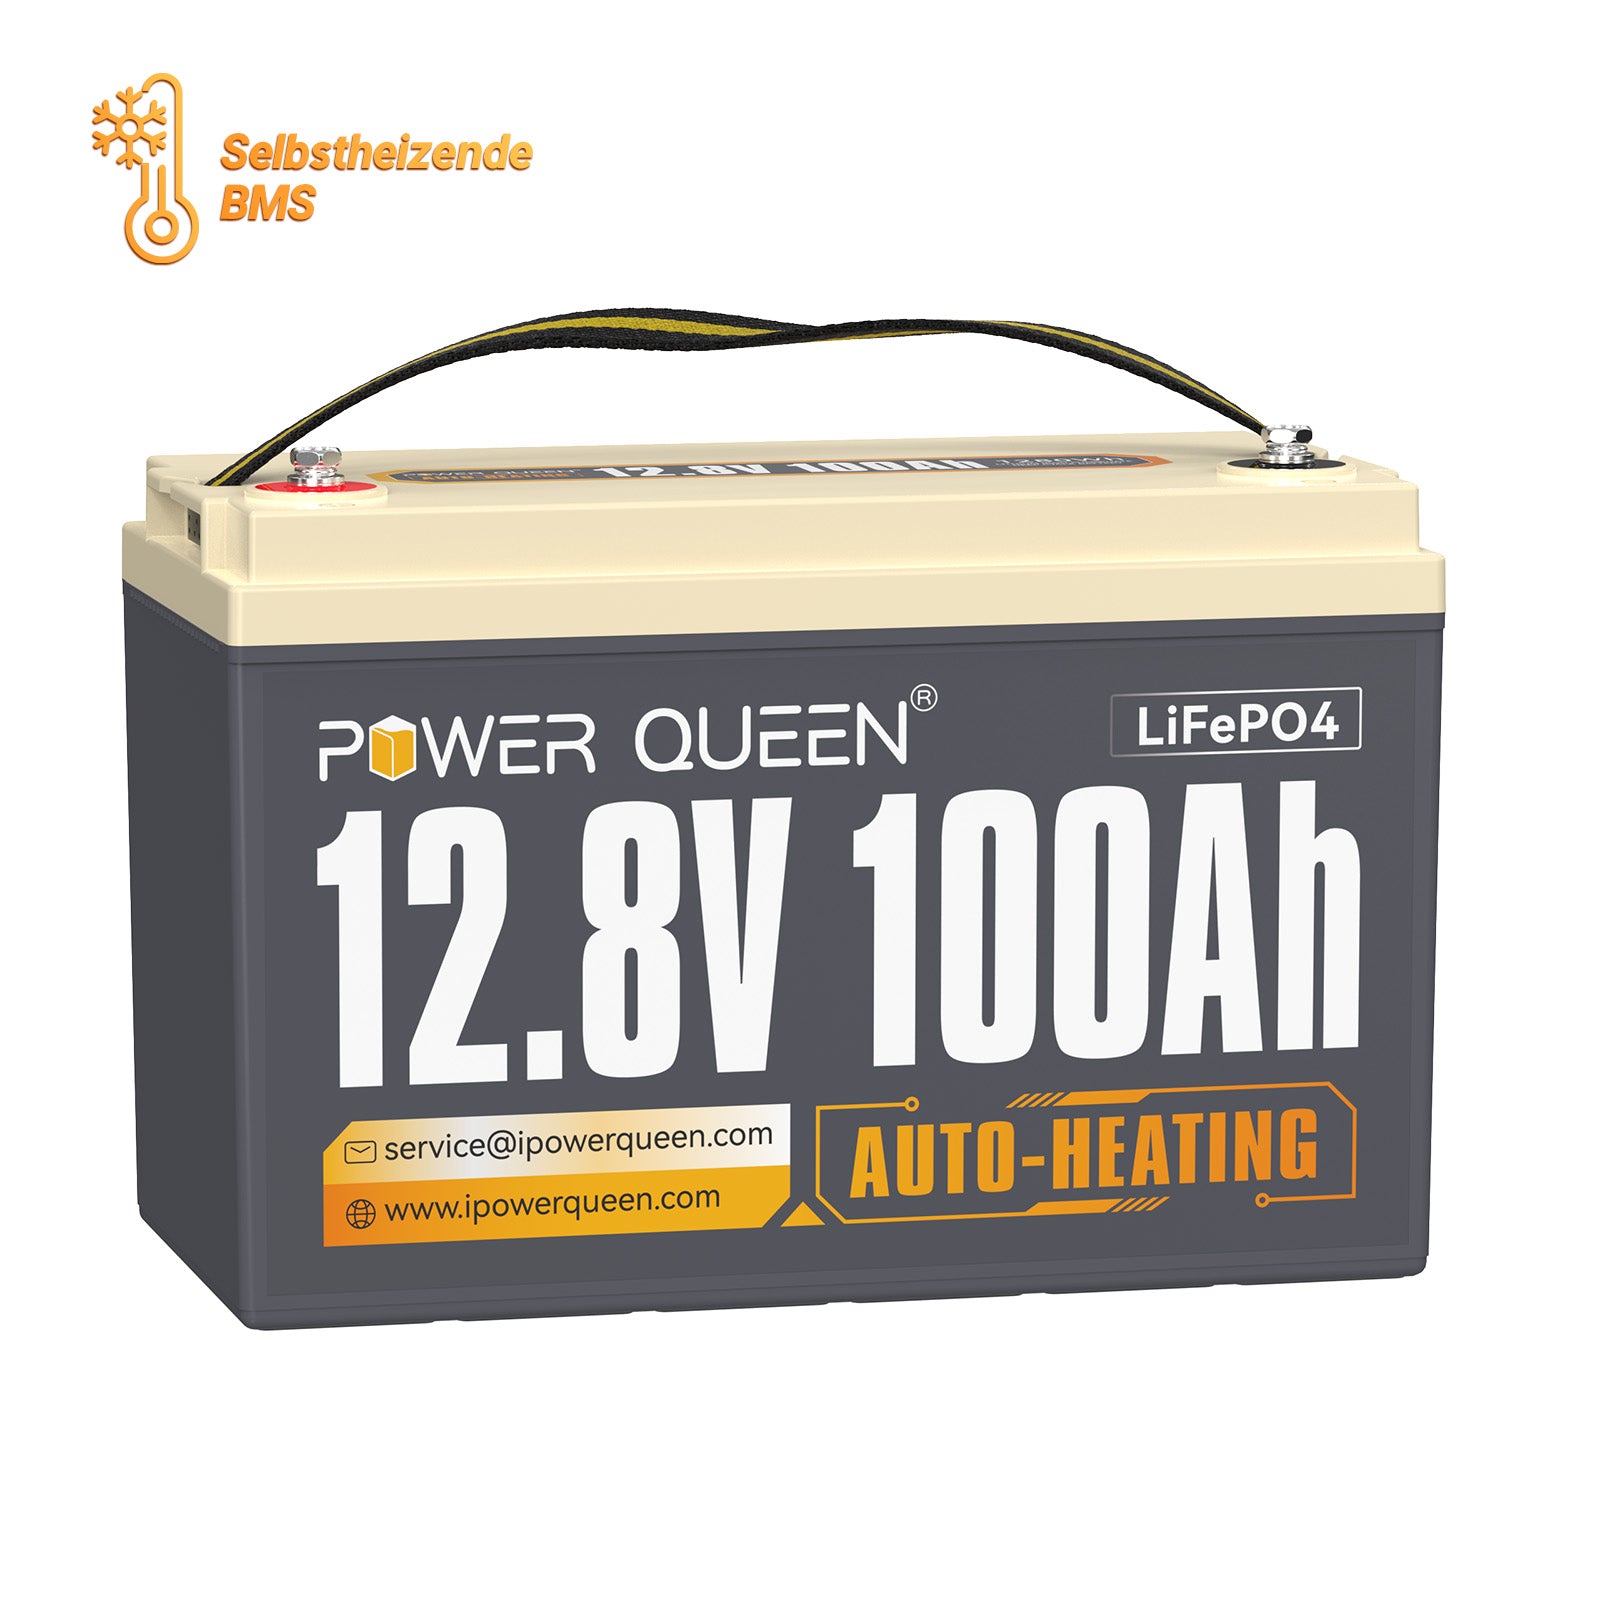 Batteria LiFePO4 autoriscaldante Power Queen 12,8 V 100 Ah, BMS 100 A integrato